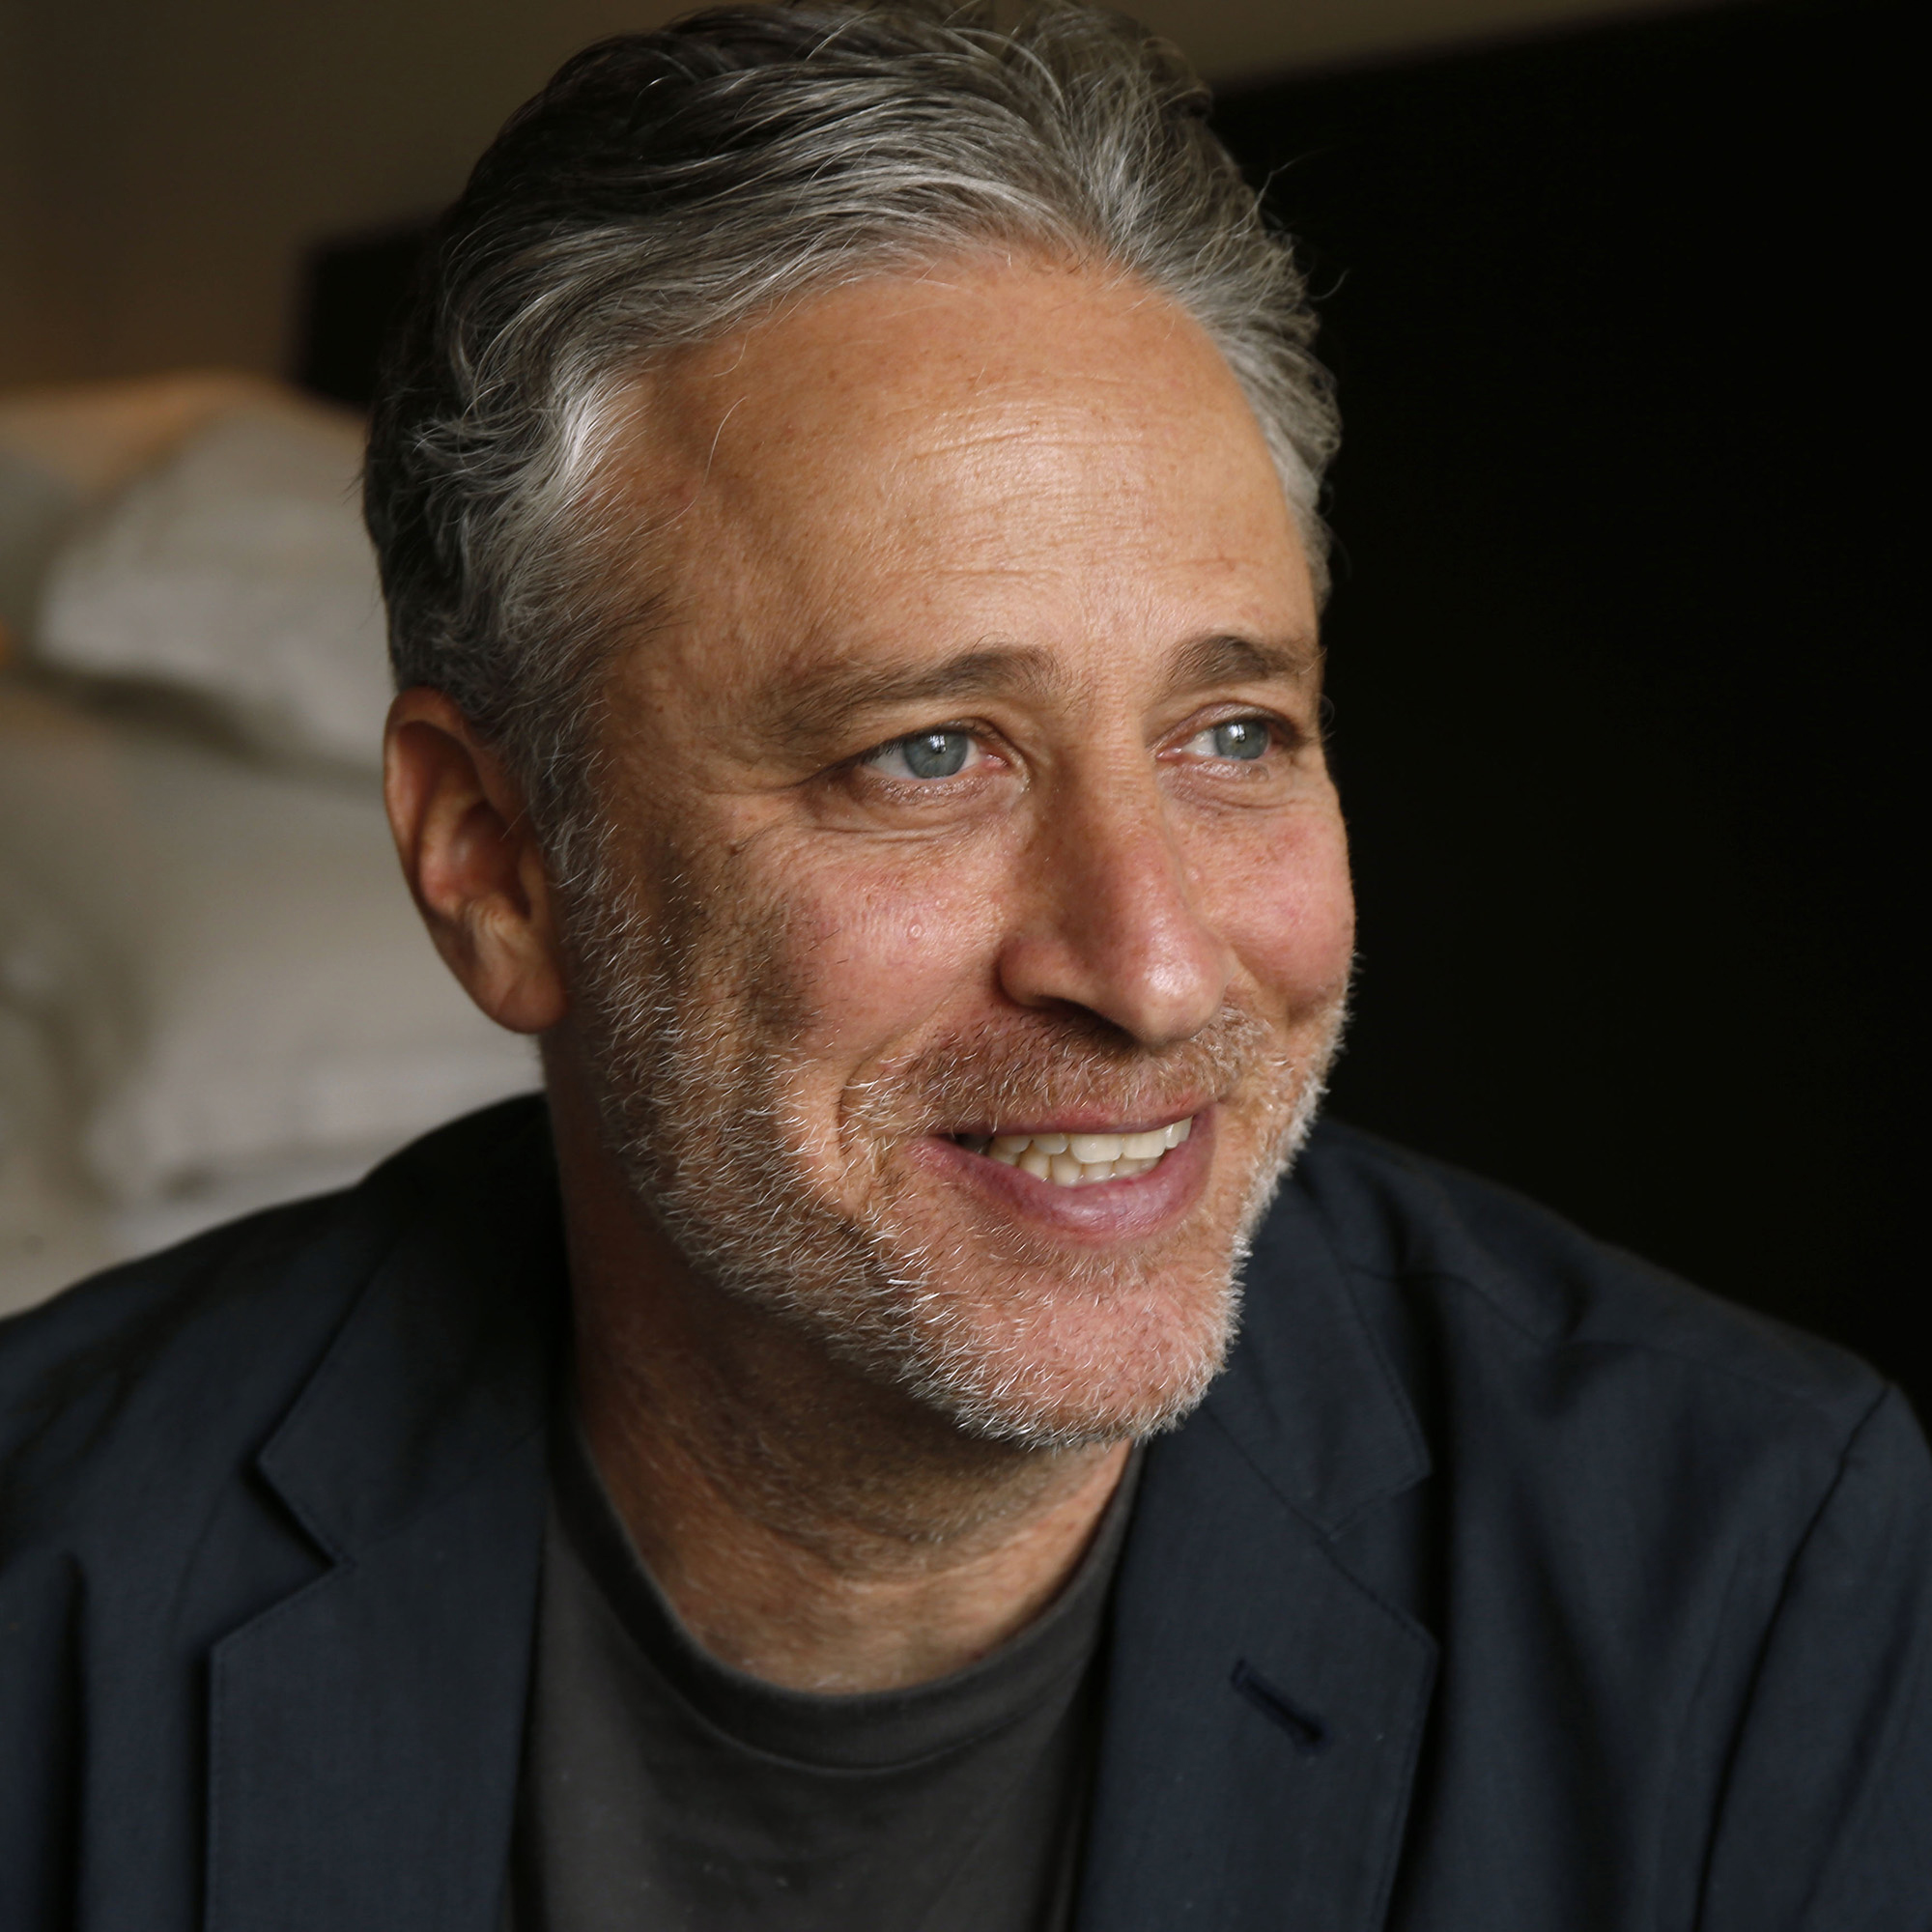 Writer-director Jon Stewart poses for a portrait on Oct. 24, 2014 in Chicago. (Phil Velasquez/Chicago Tribune/MCT)